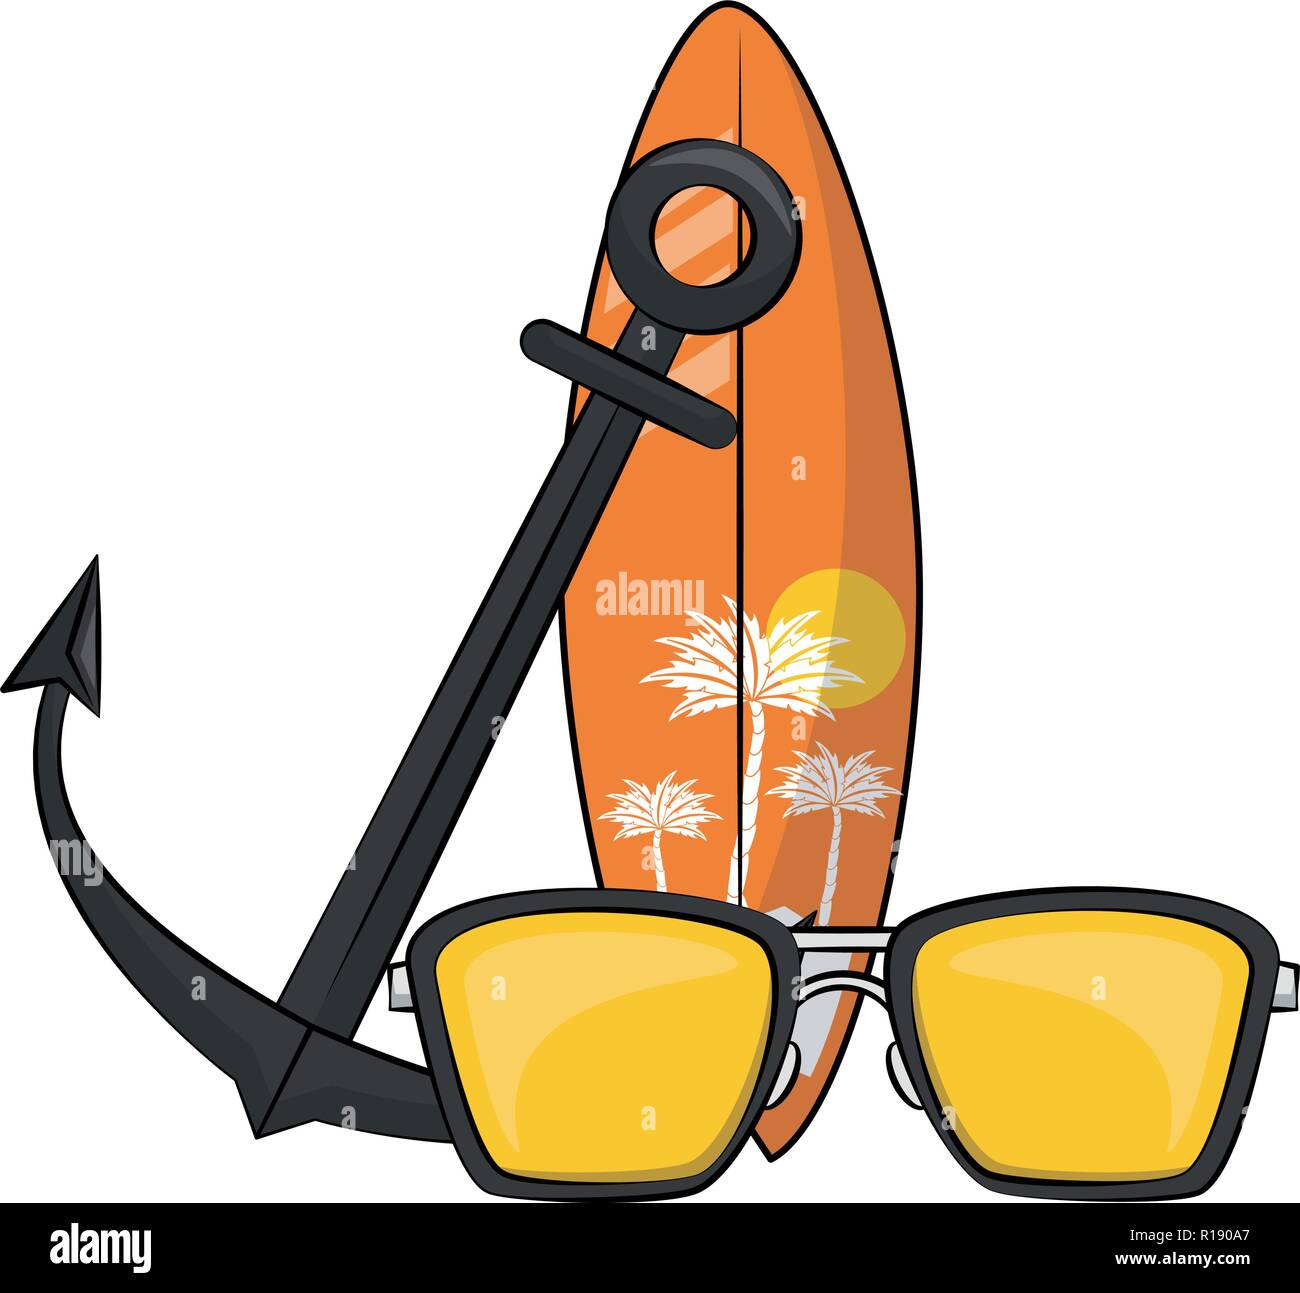 Sommer Strand Sonnenbrille und Surf Tabelle mit Anker cartoons Color Vector Illustration graphic design Stock Vektor